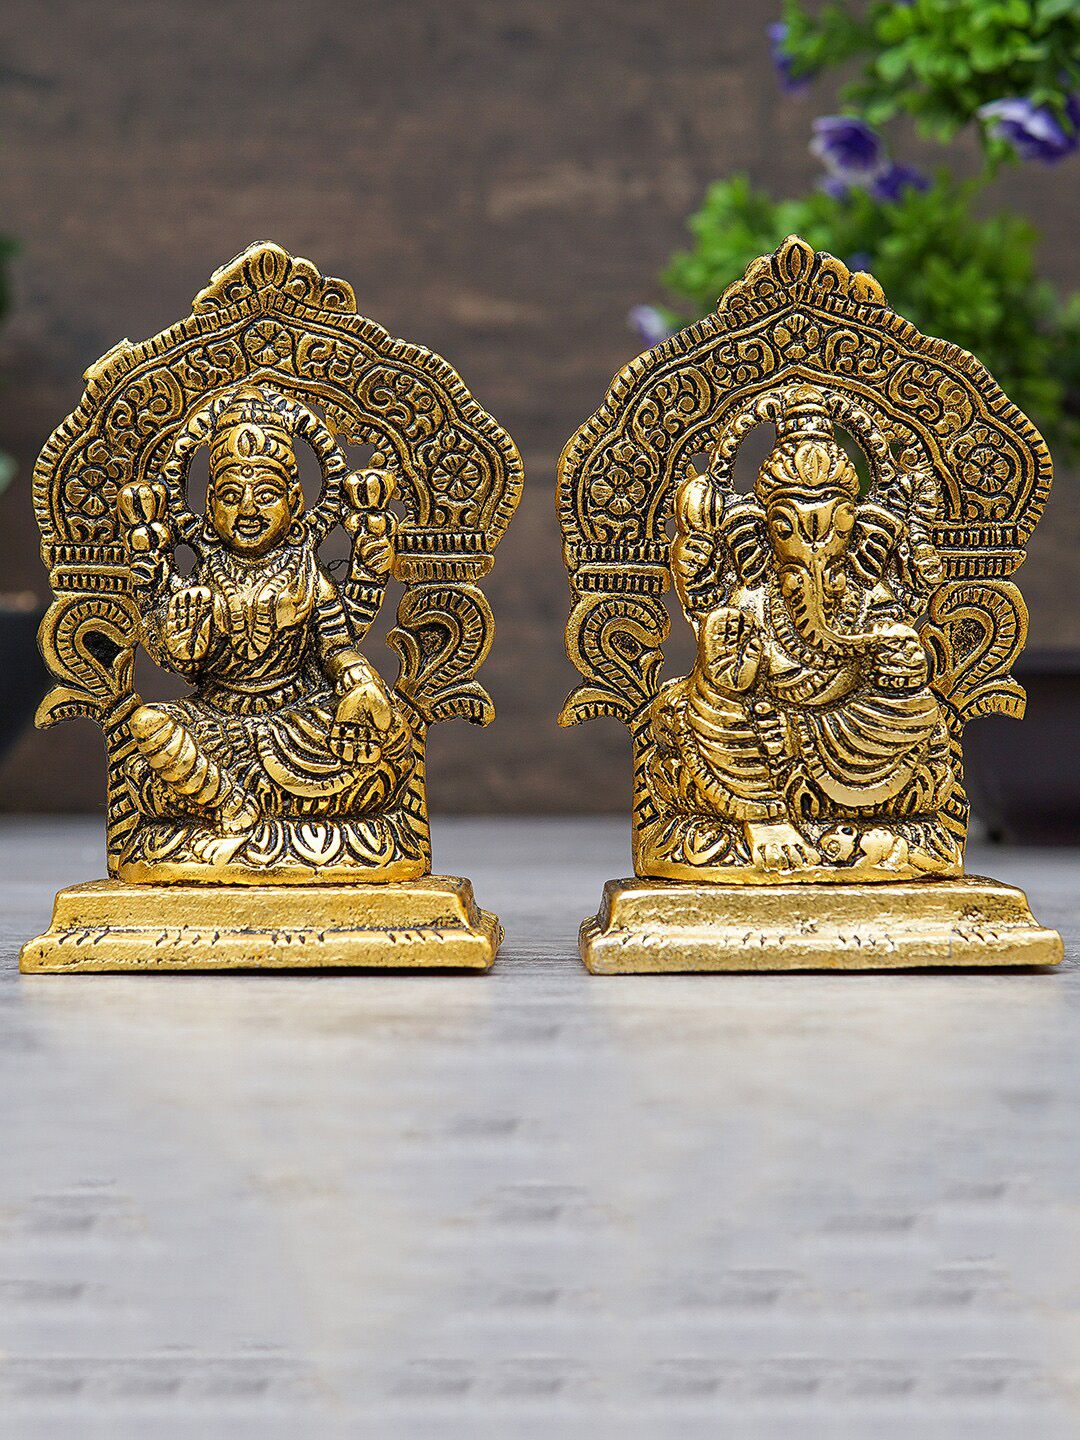 StatueStudio Gold Toned Ganesha Lakshmi Idol Showpiece Price in India